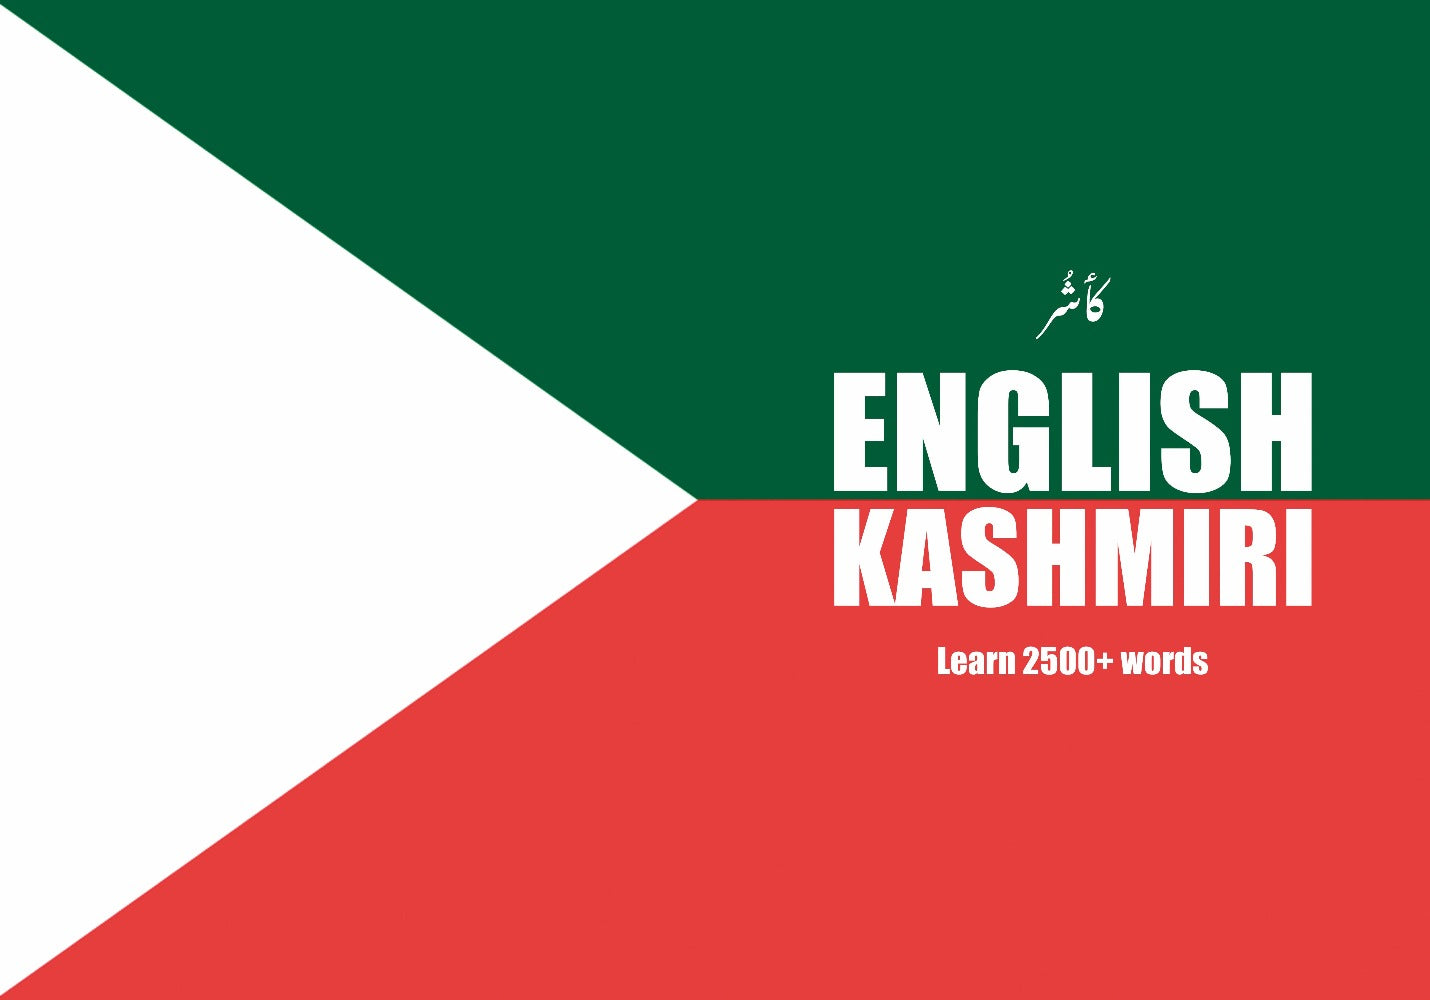 Kashmiri language learning notebook cover